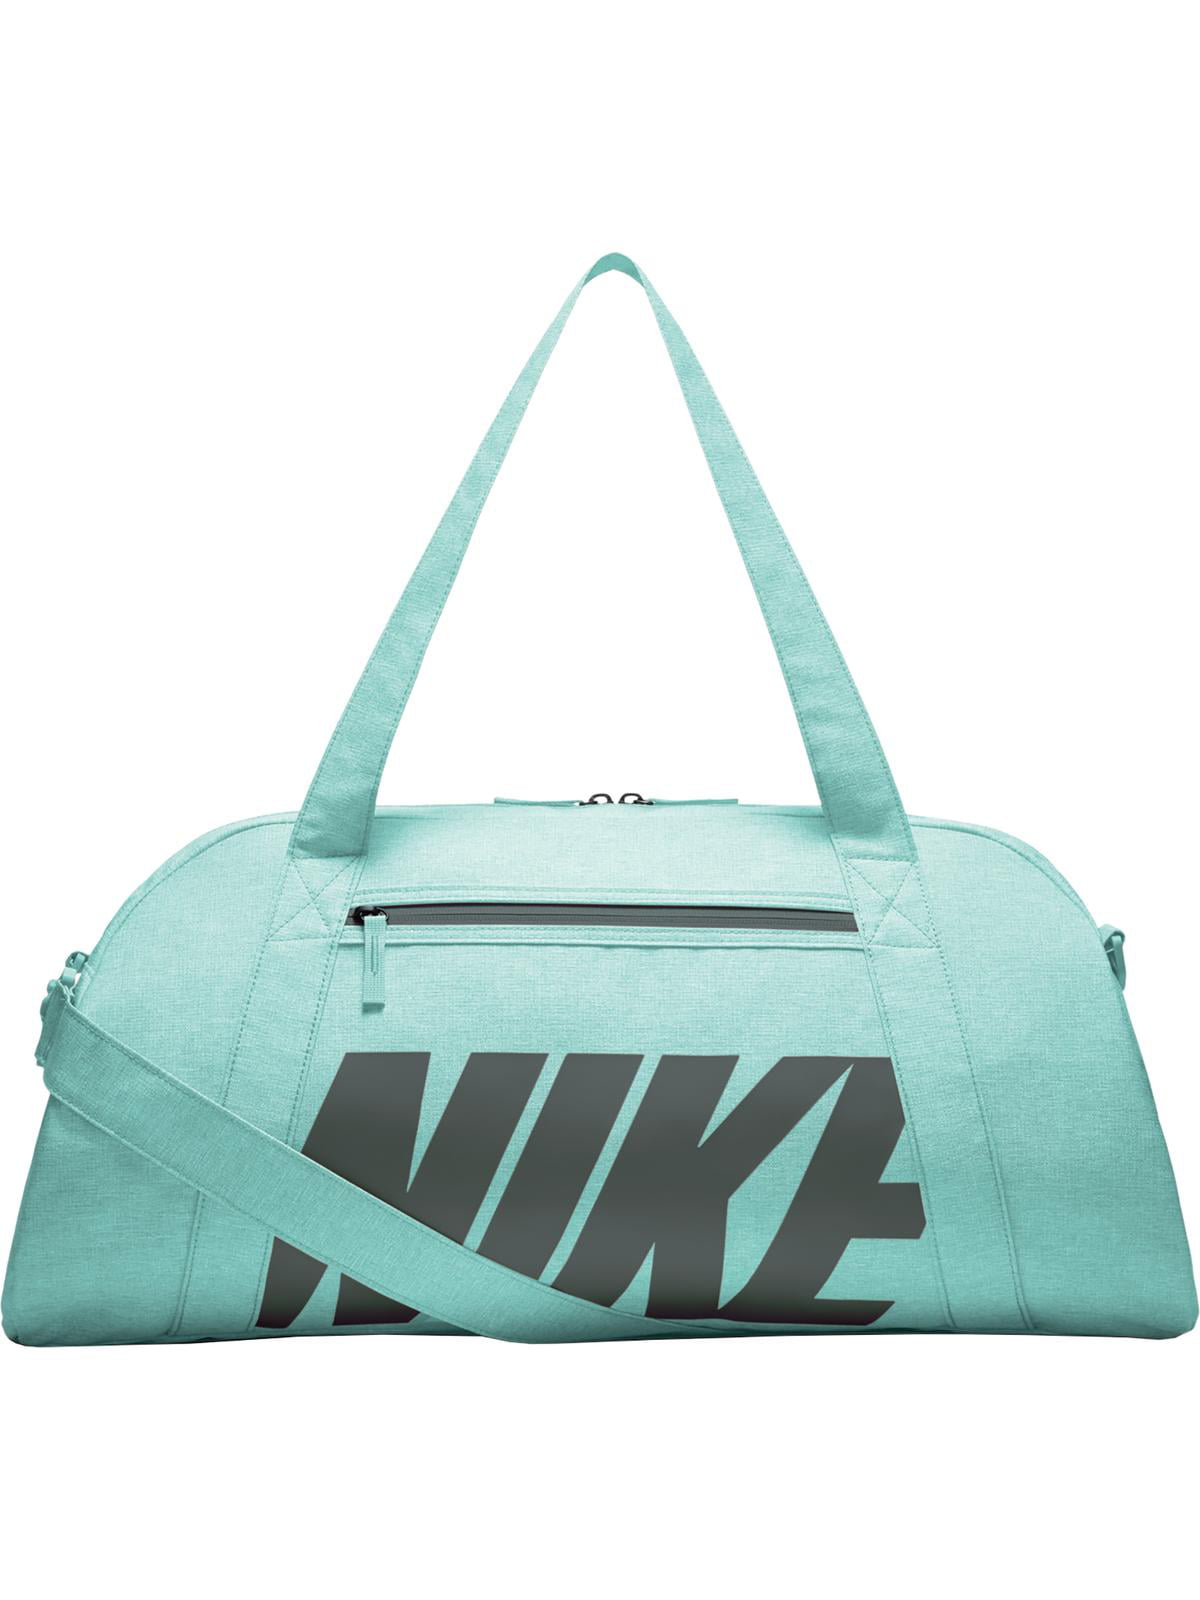 Nike Womens Sports Gym Duffle Bag Walmart.com